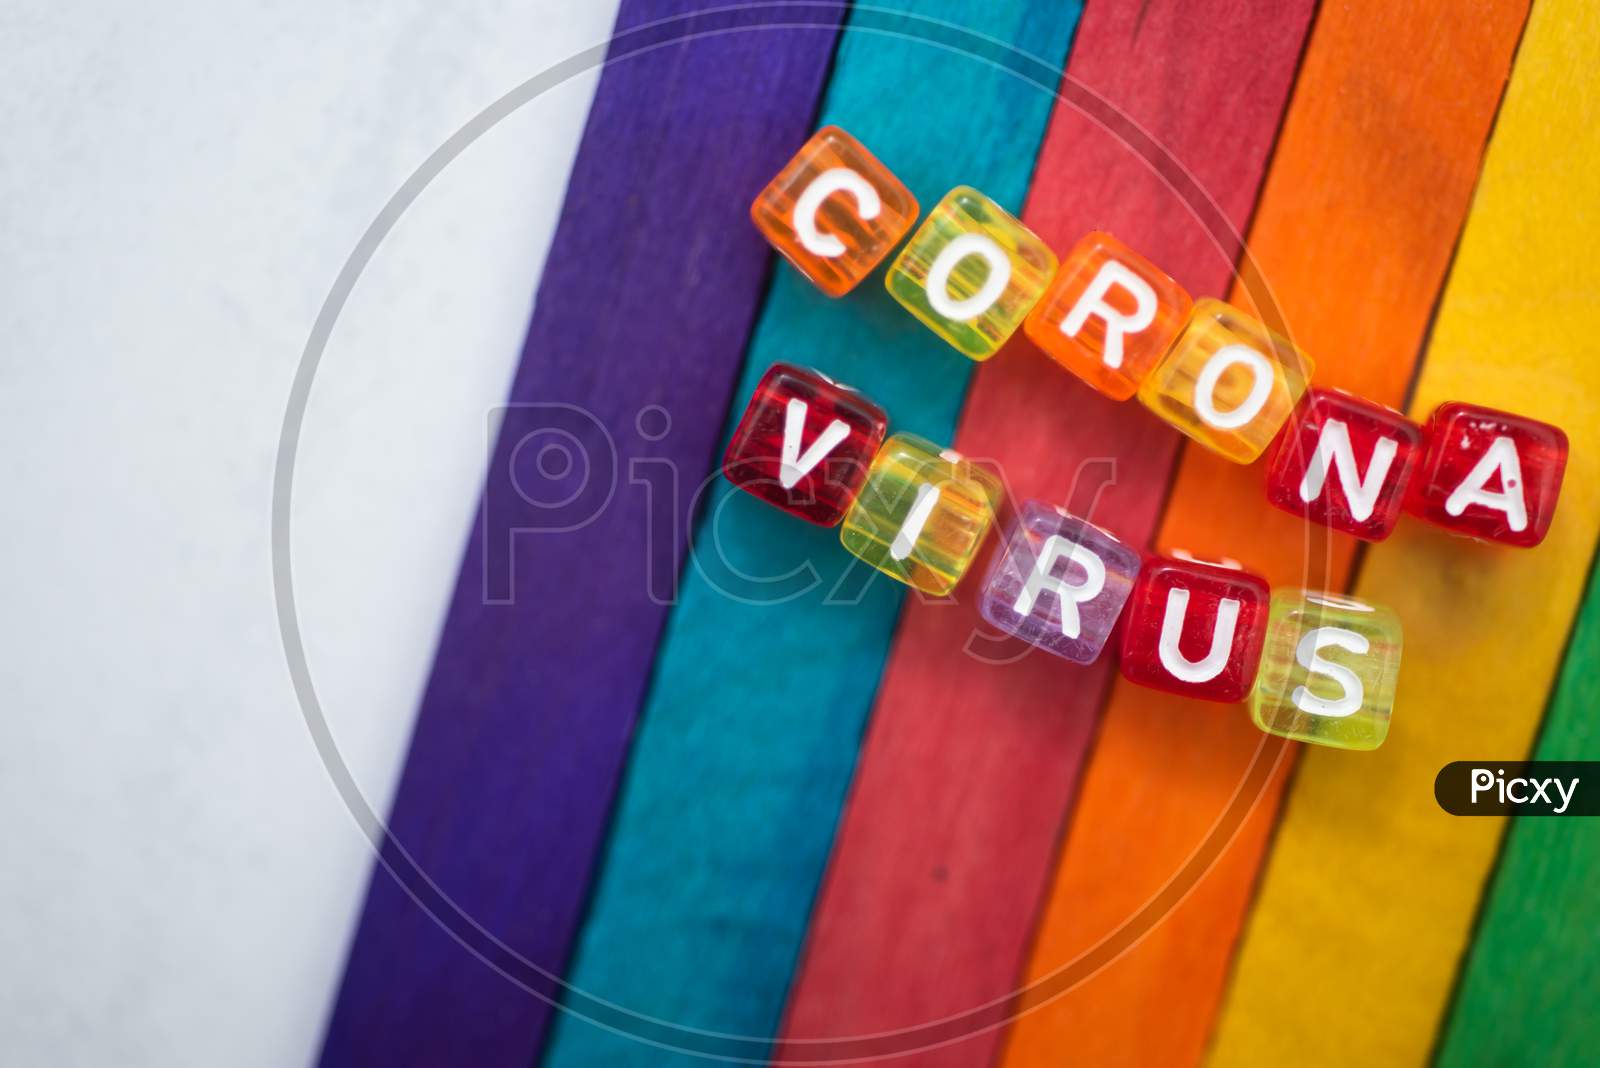 Colorful Word Corona Virus English Alphabet Cube On Colourfull Background, Selective Focus